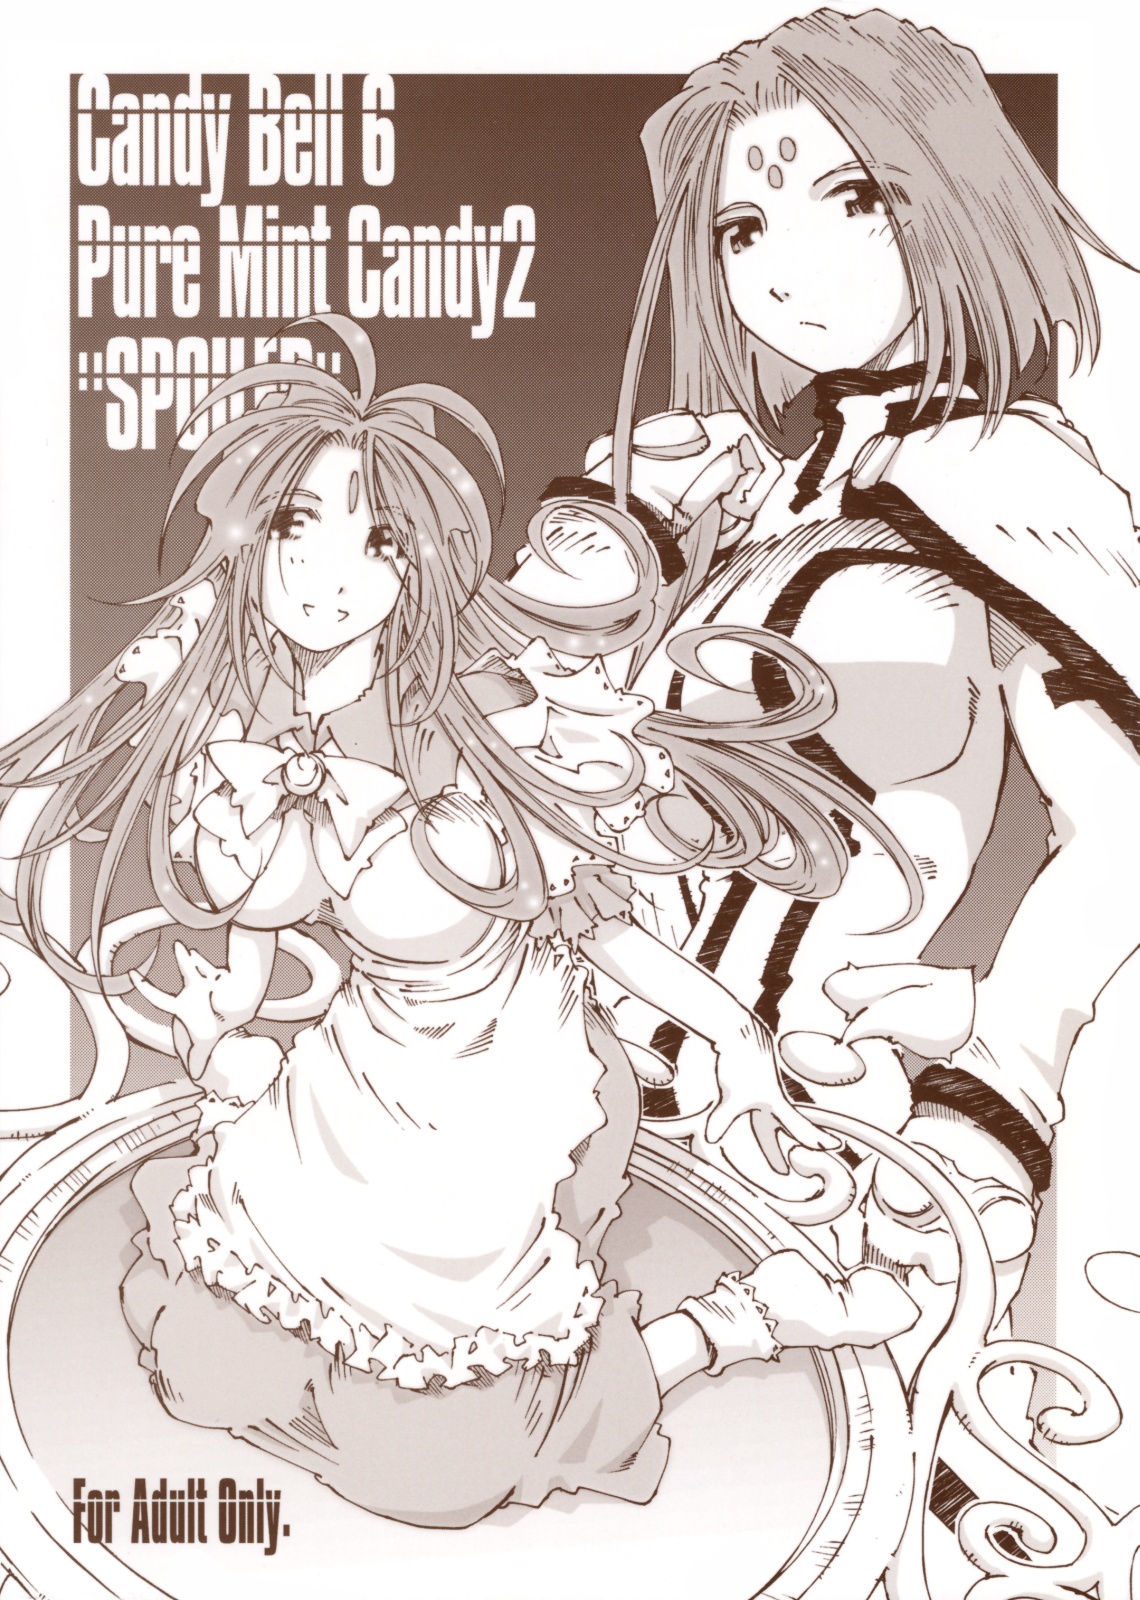 (C74) [RPG COMPANY 2 (Toumi Haruka)] Candy Bell 6 - Pure Mint Candy 2 SPOILED (Aa! Megami-sama! [Ah! My Goddess]) page 1 full